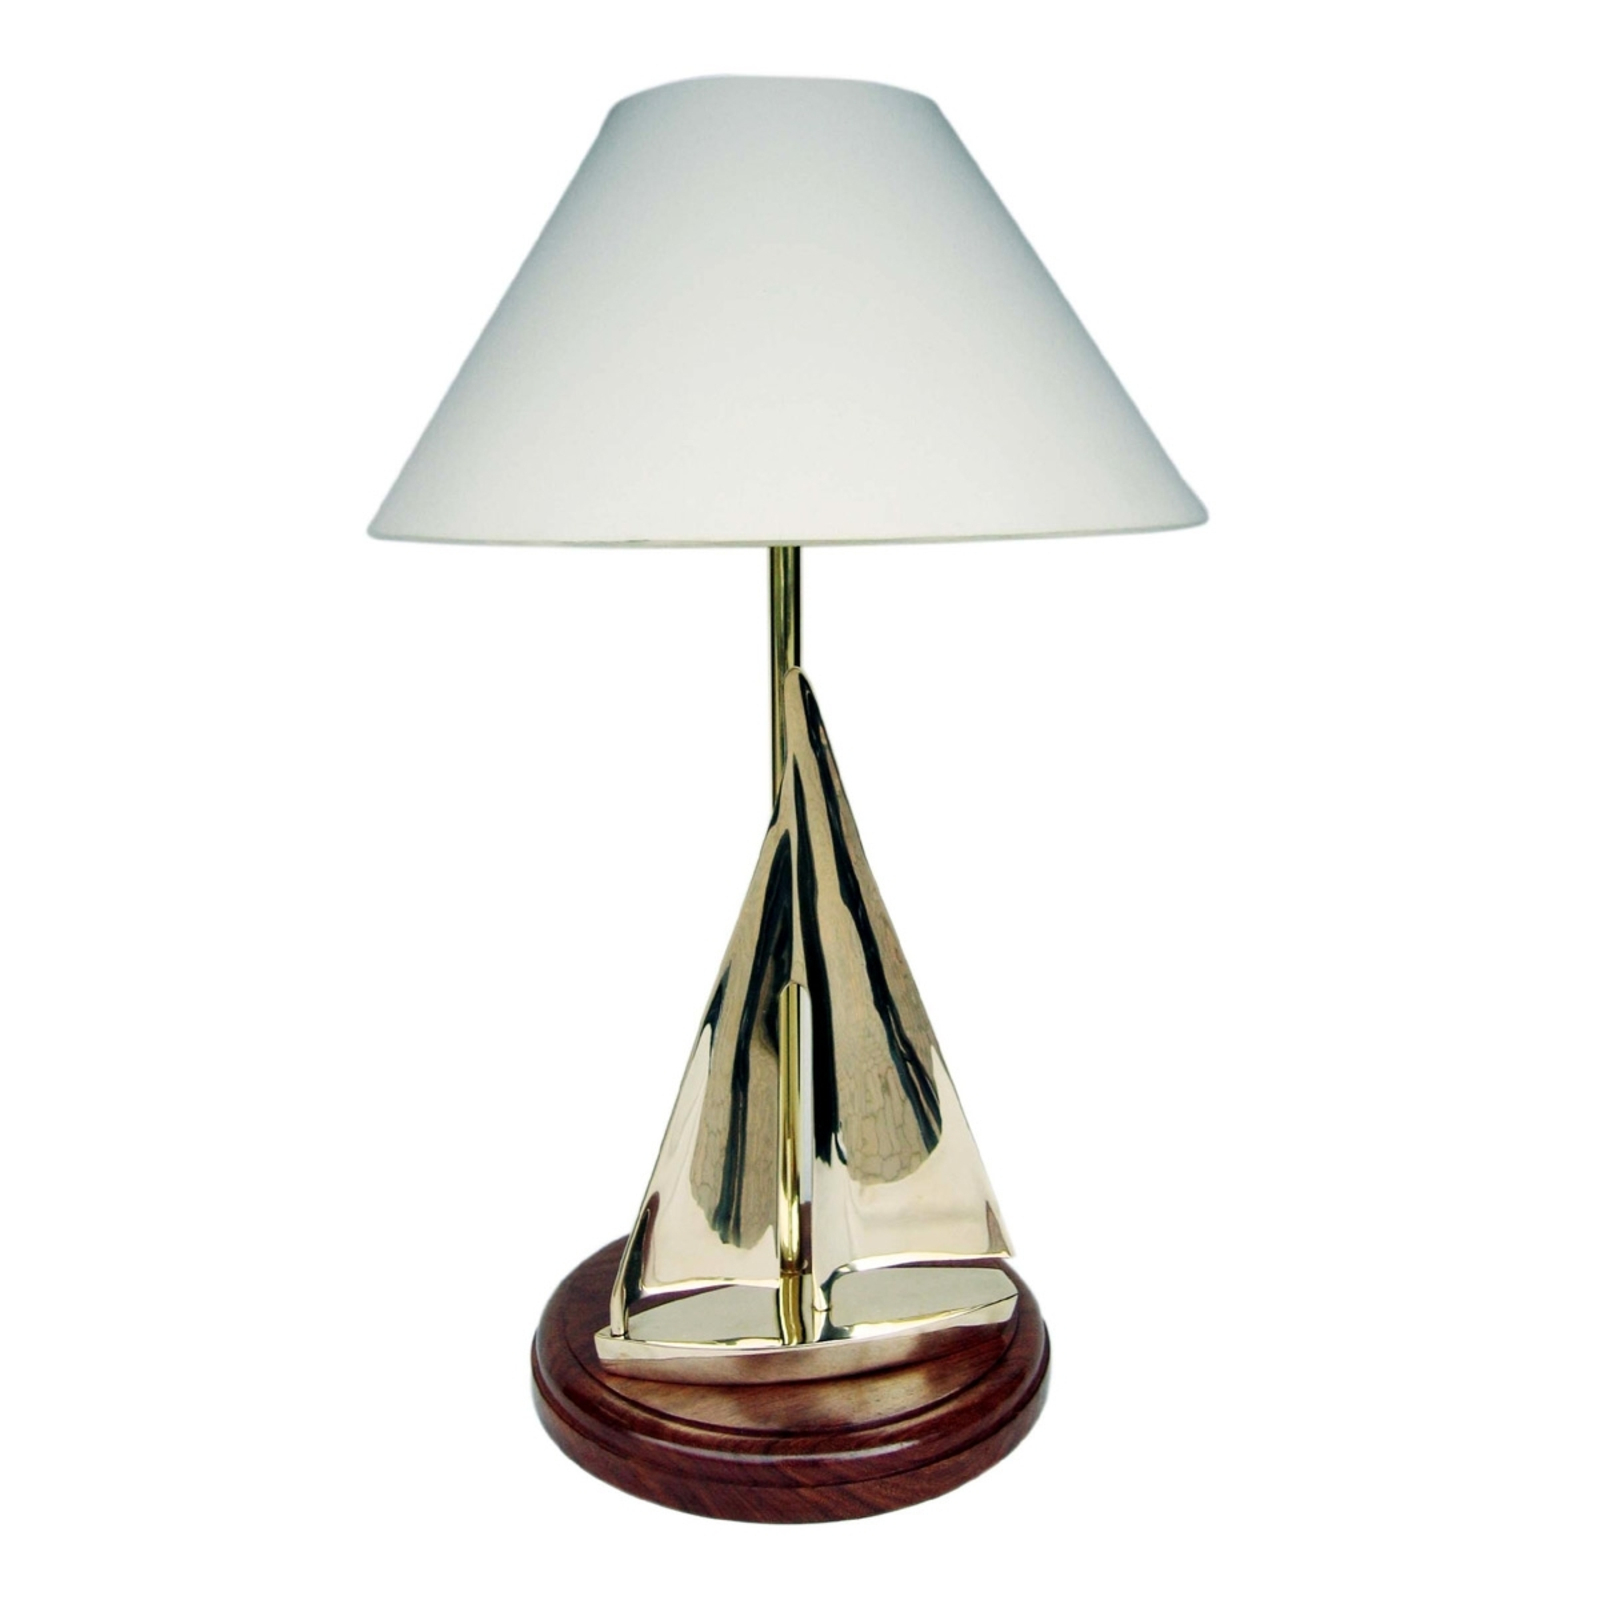 serie oplichterij auteur Opvallende tafellamp SAILING, 60 cm hoog | Lampen24.nl